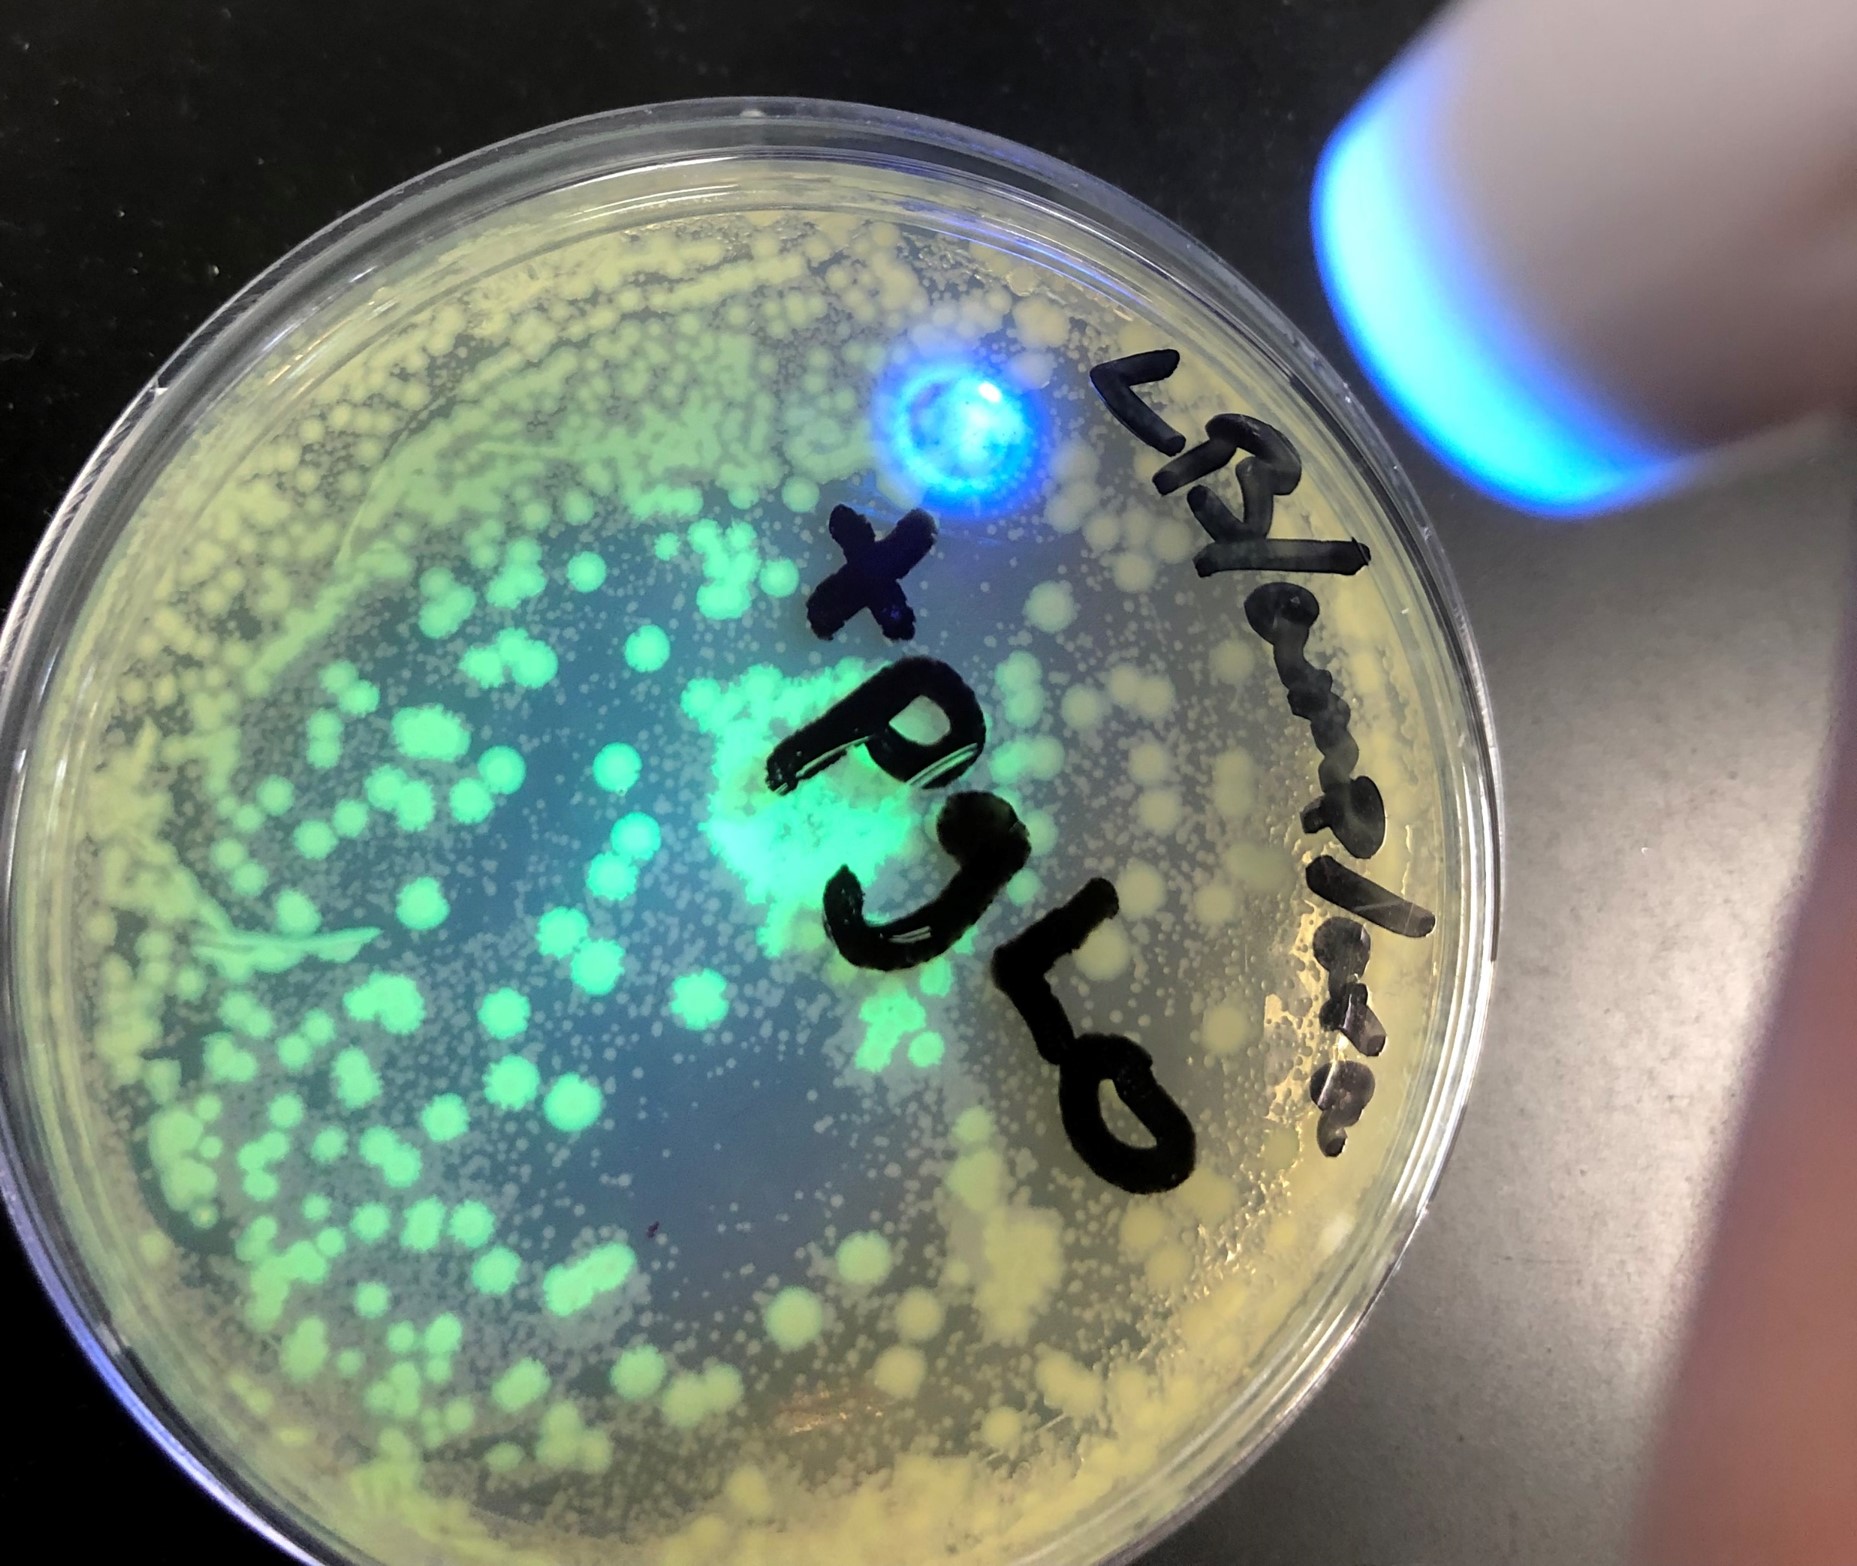 33: Bacterial Transformation